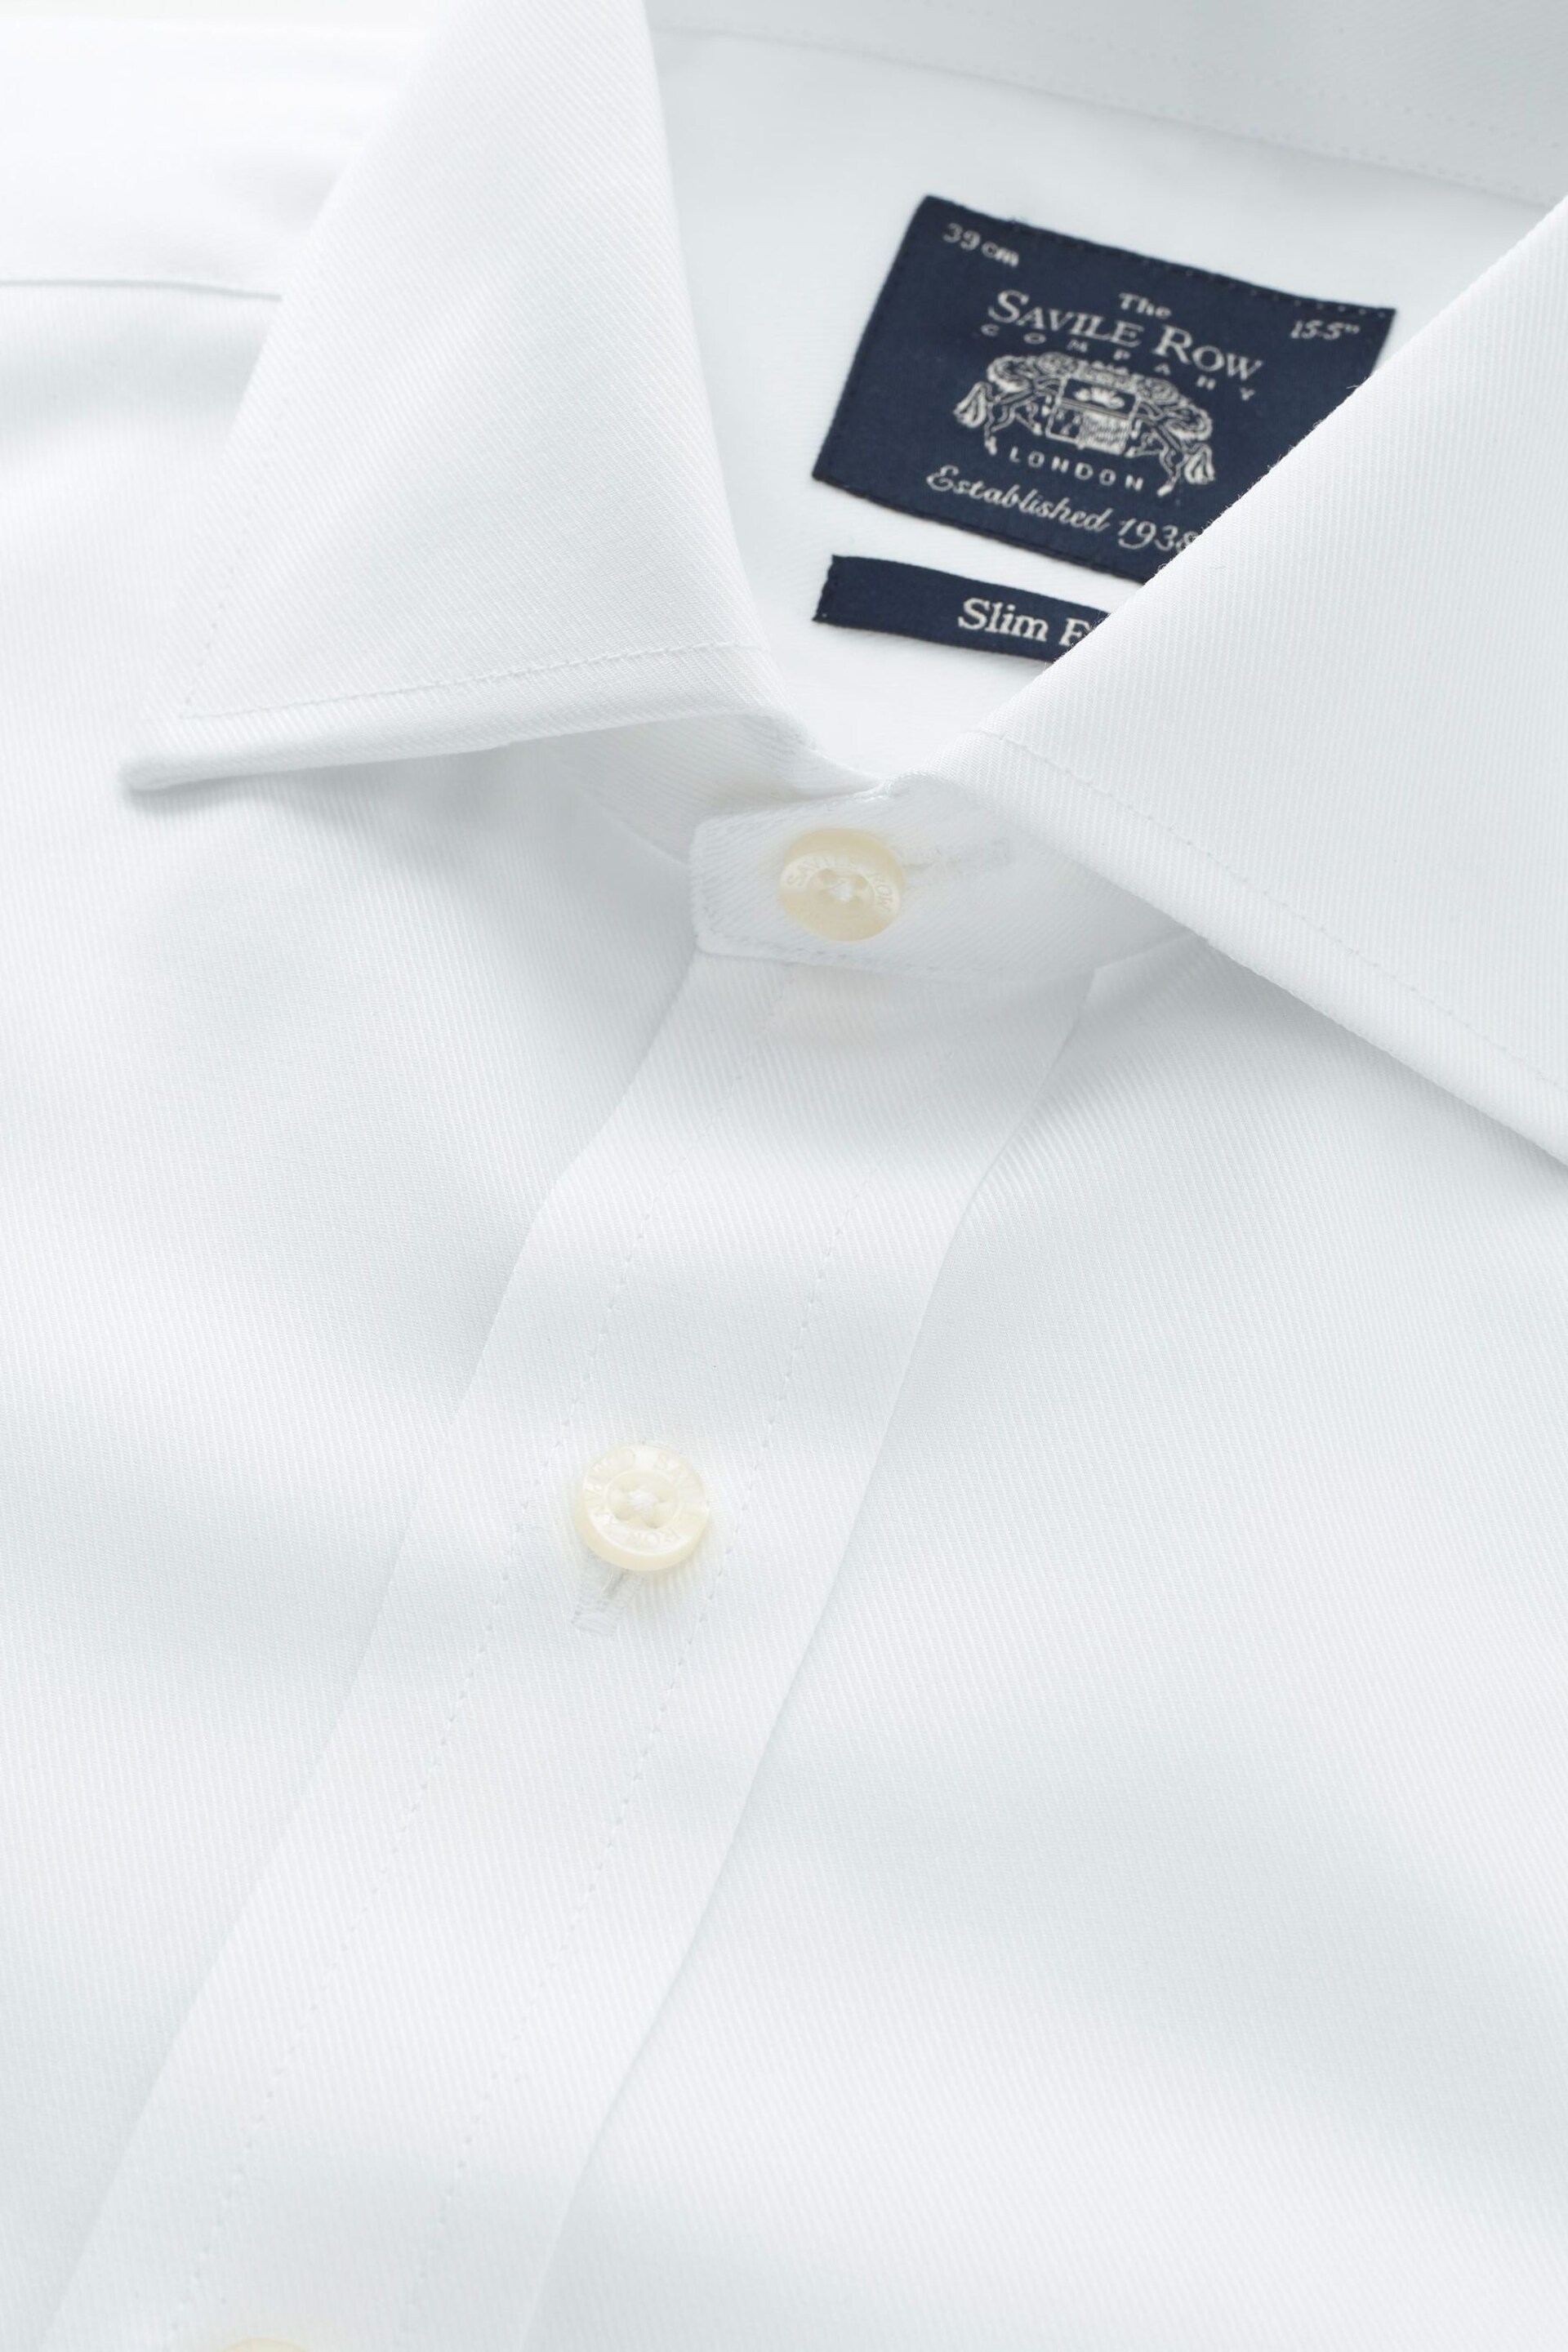 Savile Row Co White Fine Twill Slim Fit Single Cuff Shirt - Image 4 of 6